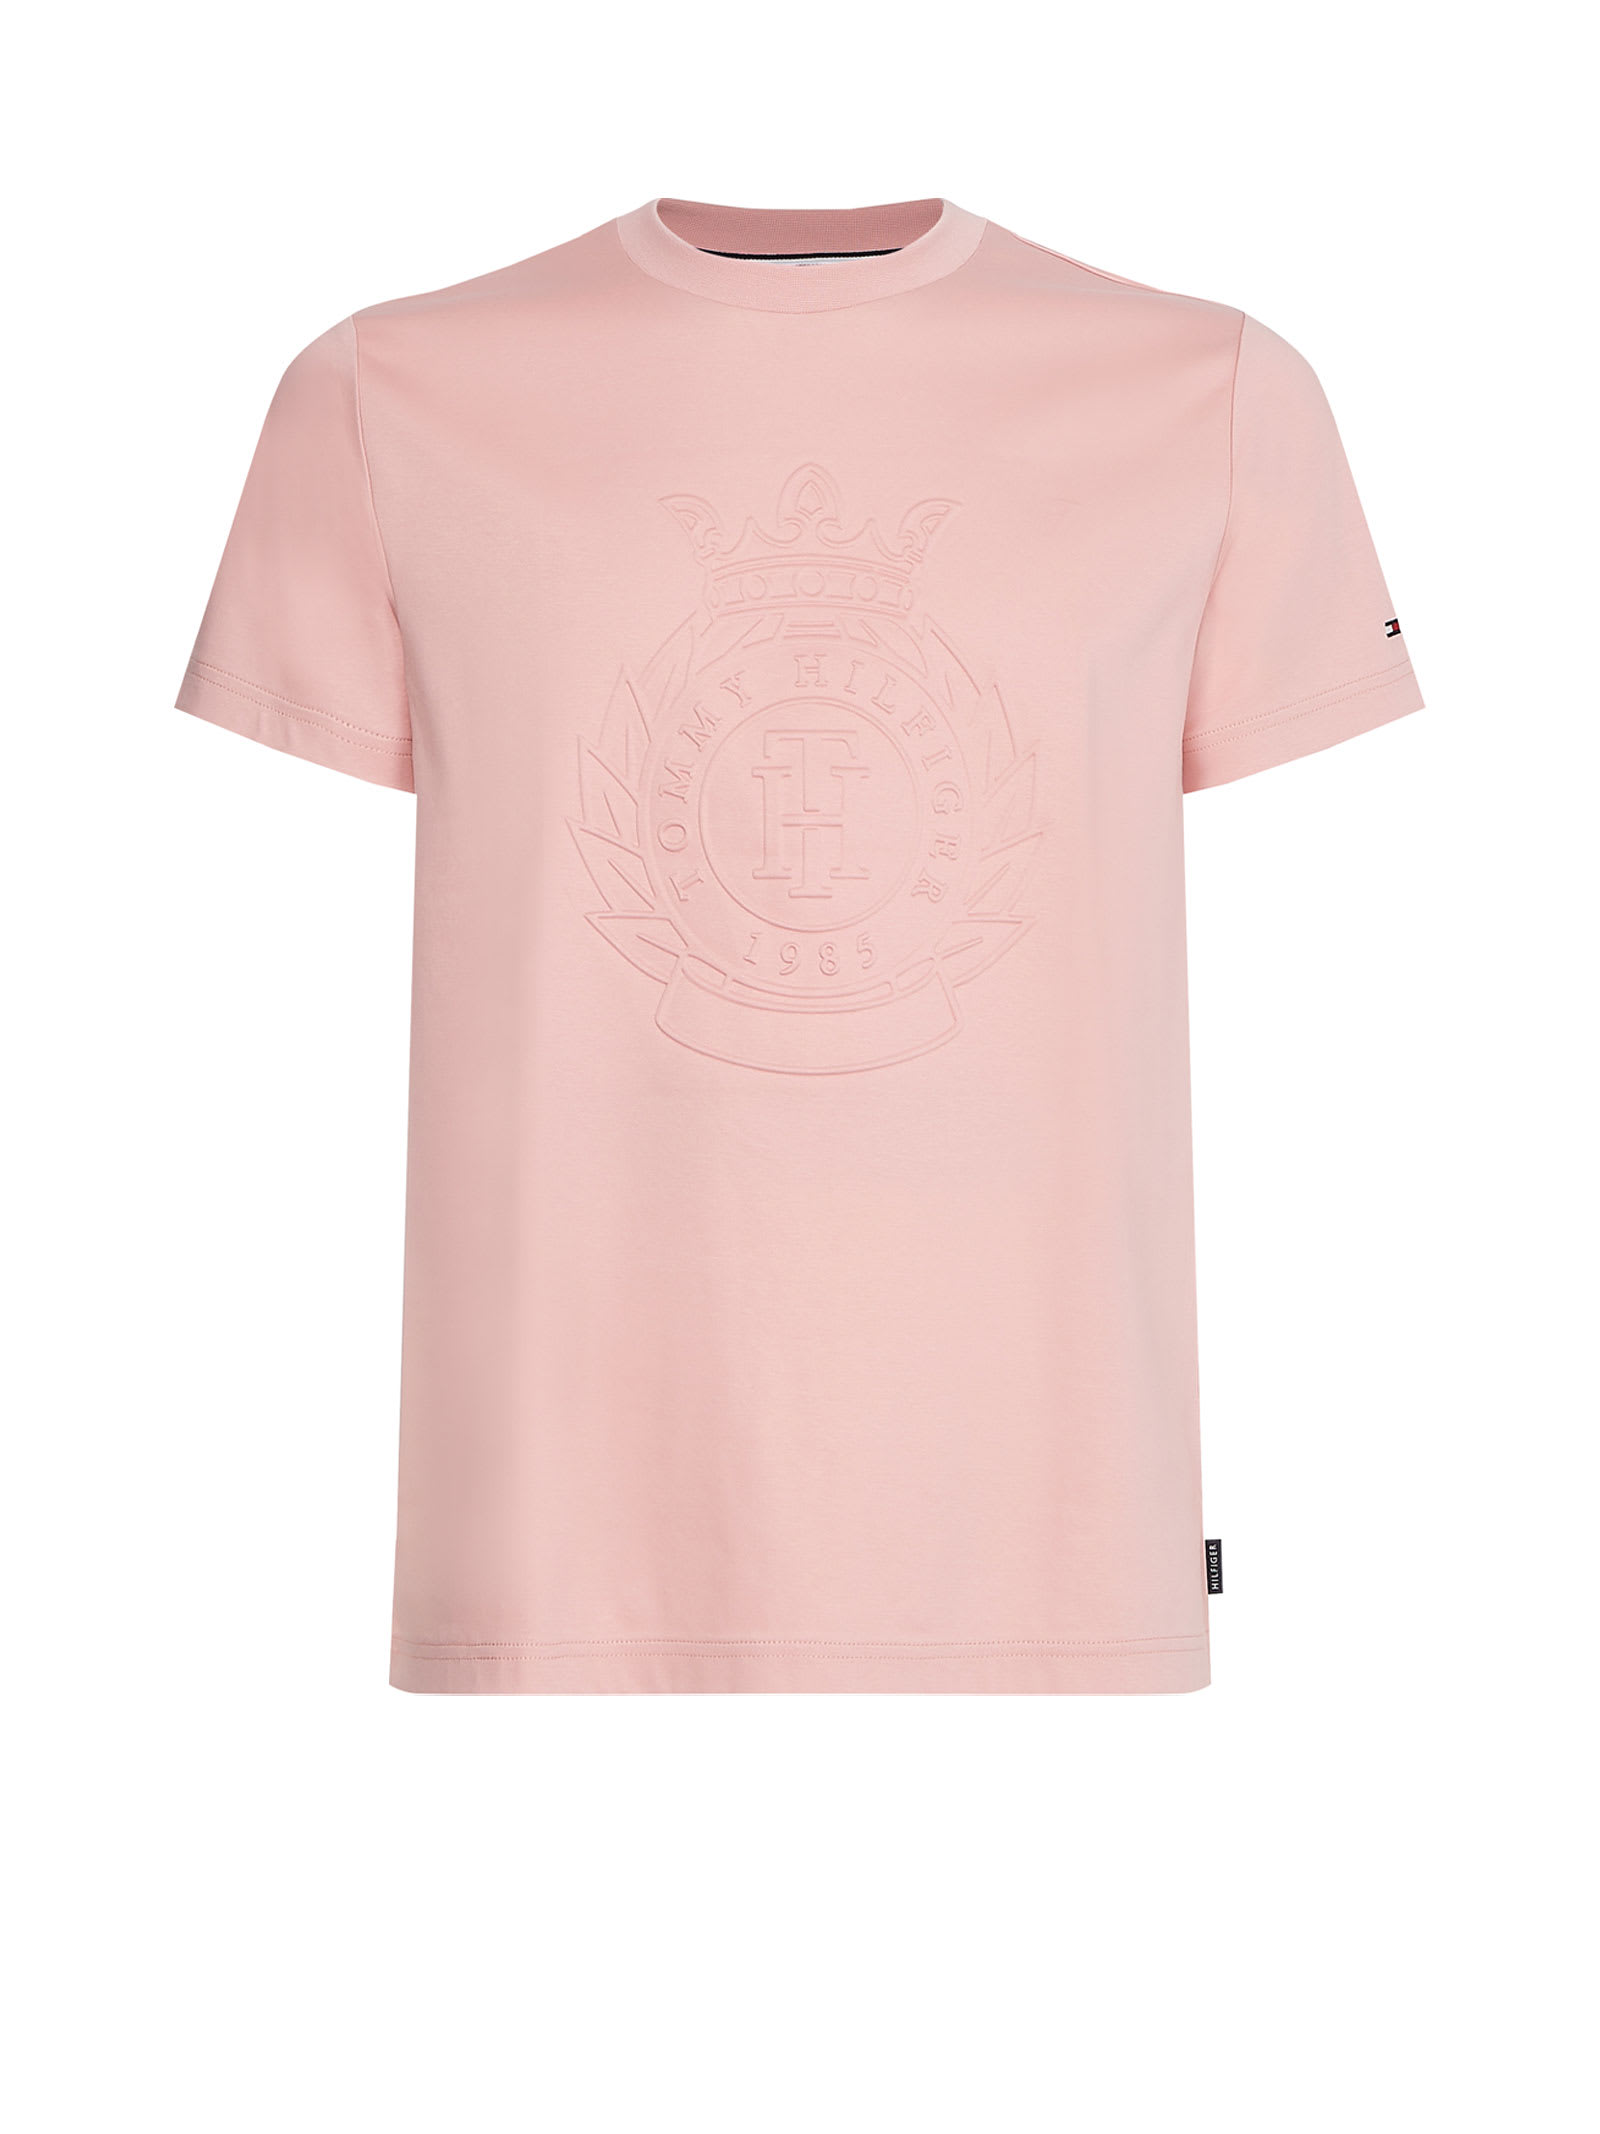 Tommy Hilfiger Pink Cotton T-shirt